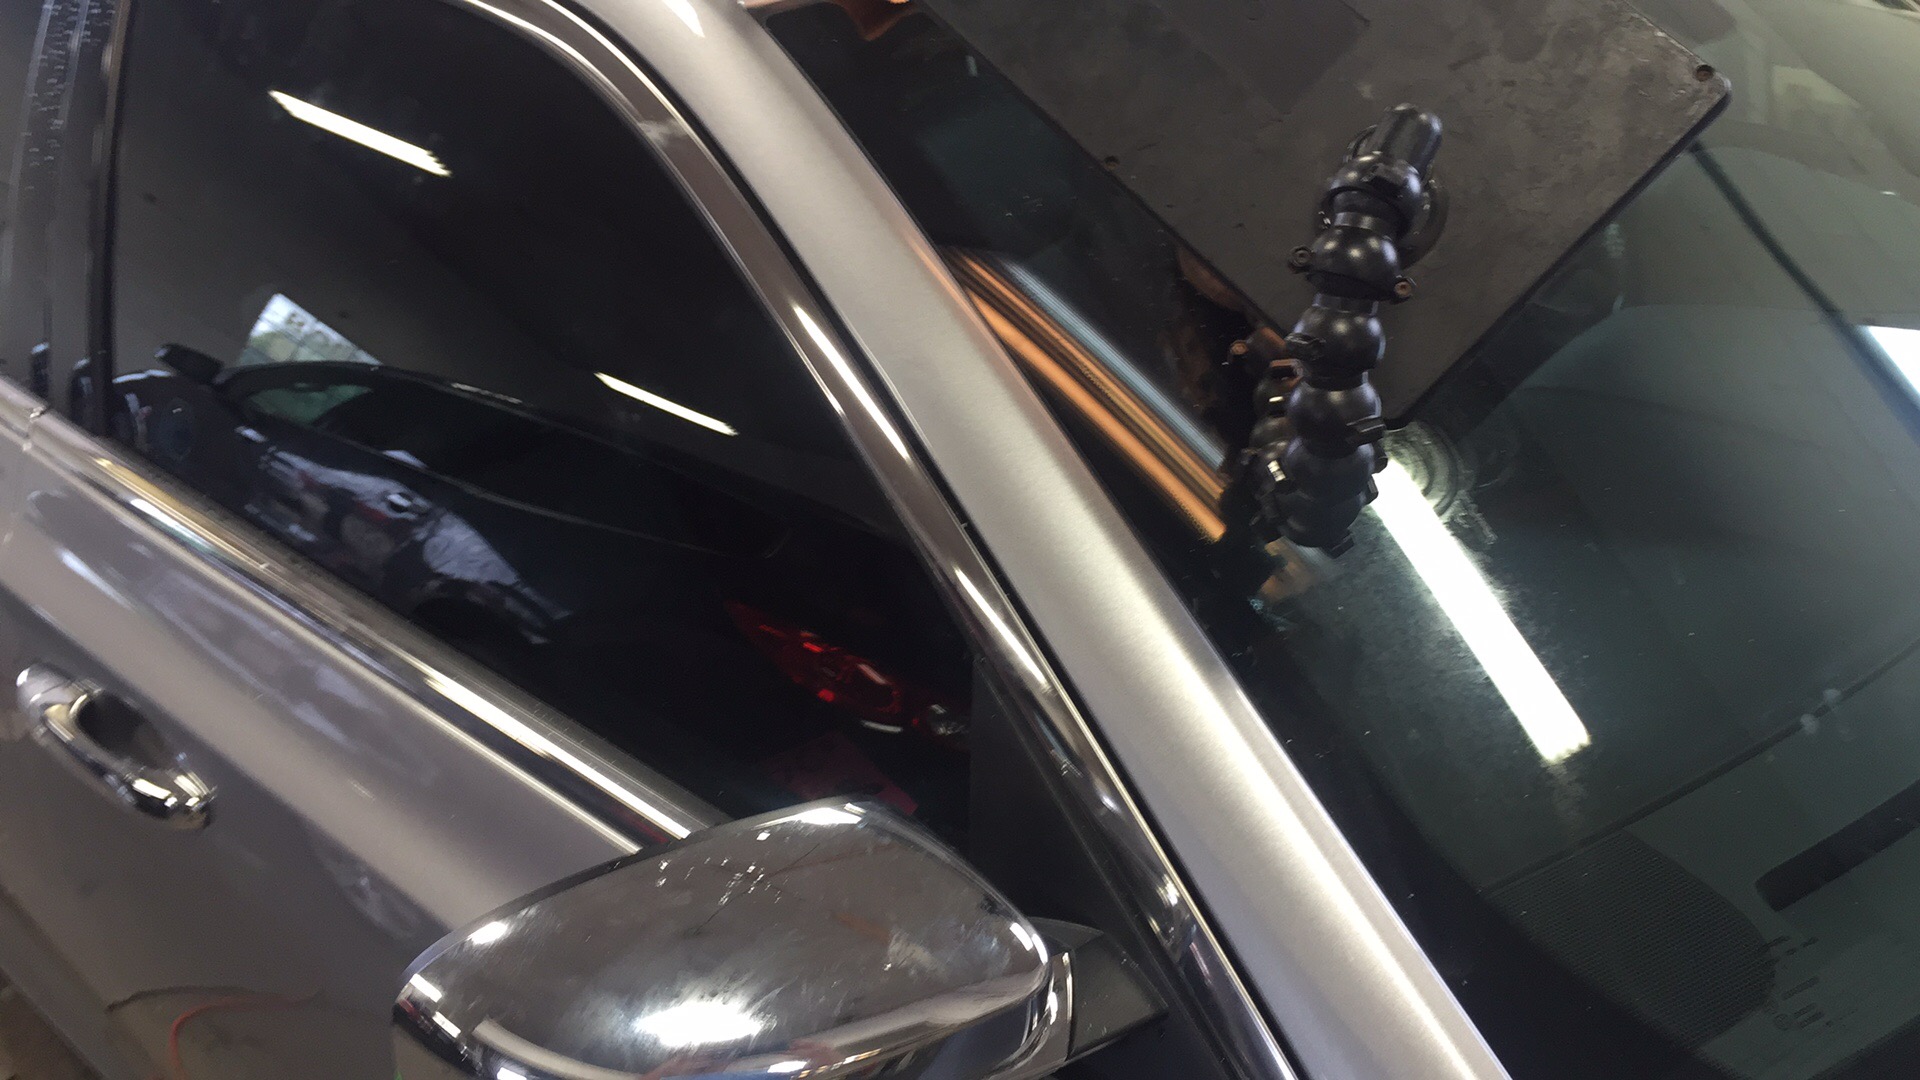 2015 Chrysler 300 Sharp Dent Removal on Pillar all glue pull, paintless dent repair, Springfield, IL http://217dent.com